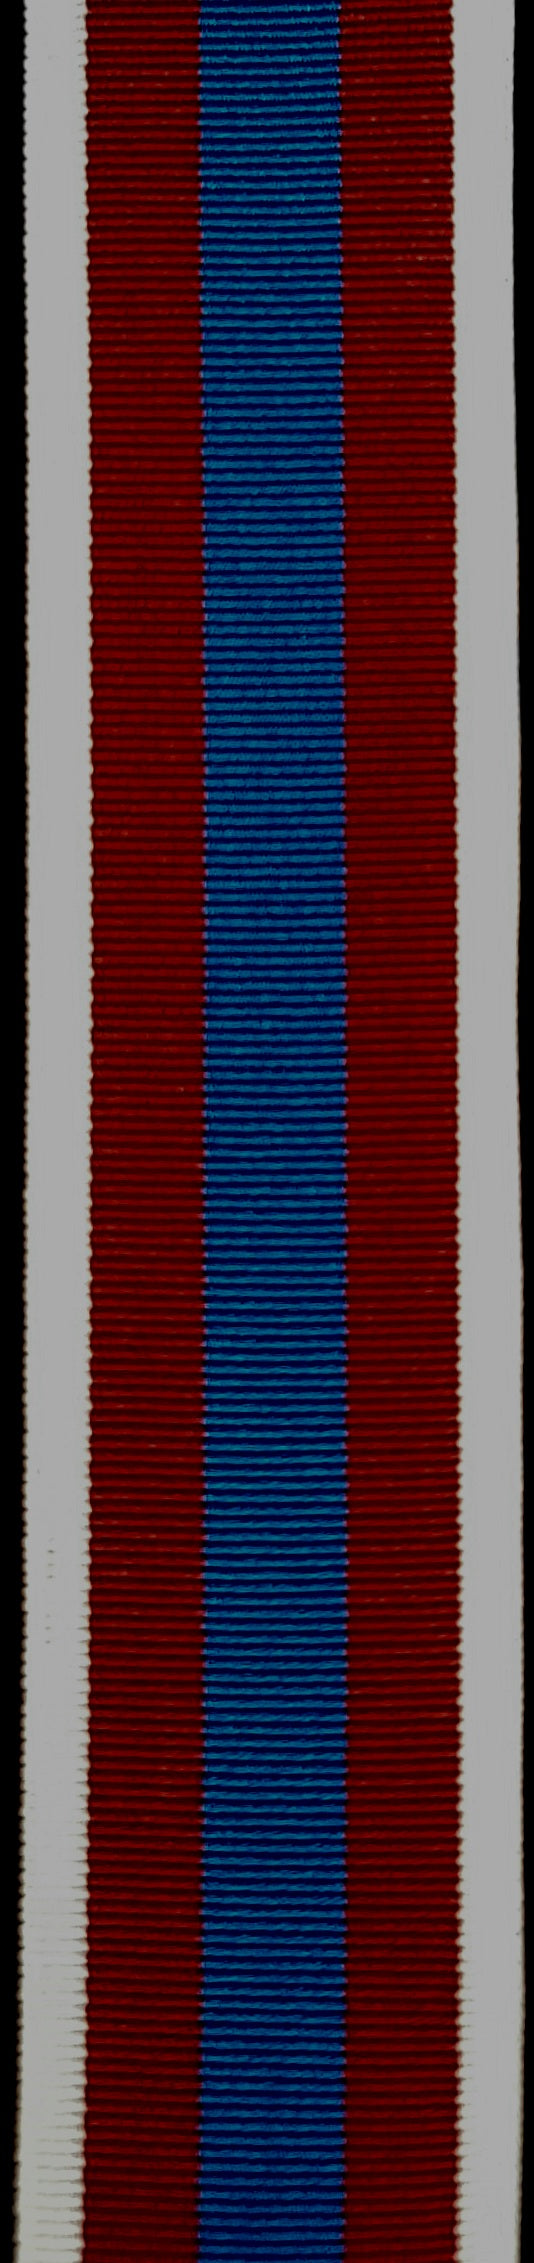 Ribbon, Queen's Platinum Jubilee Medal (2022)